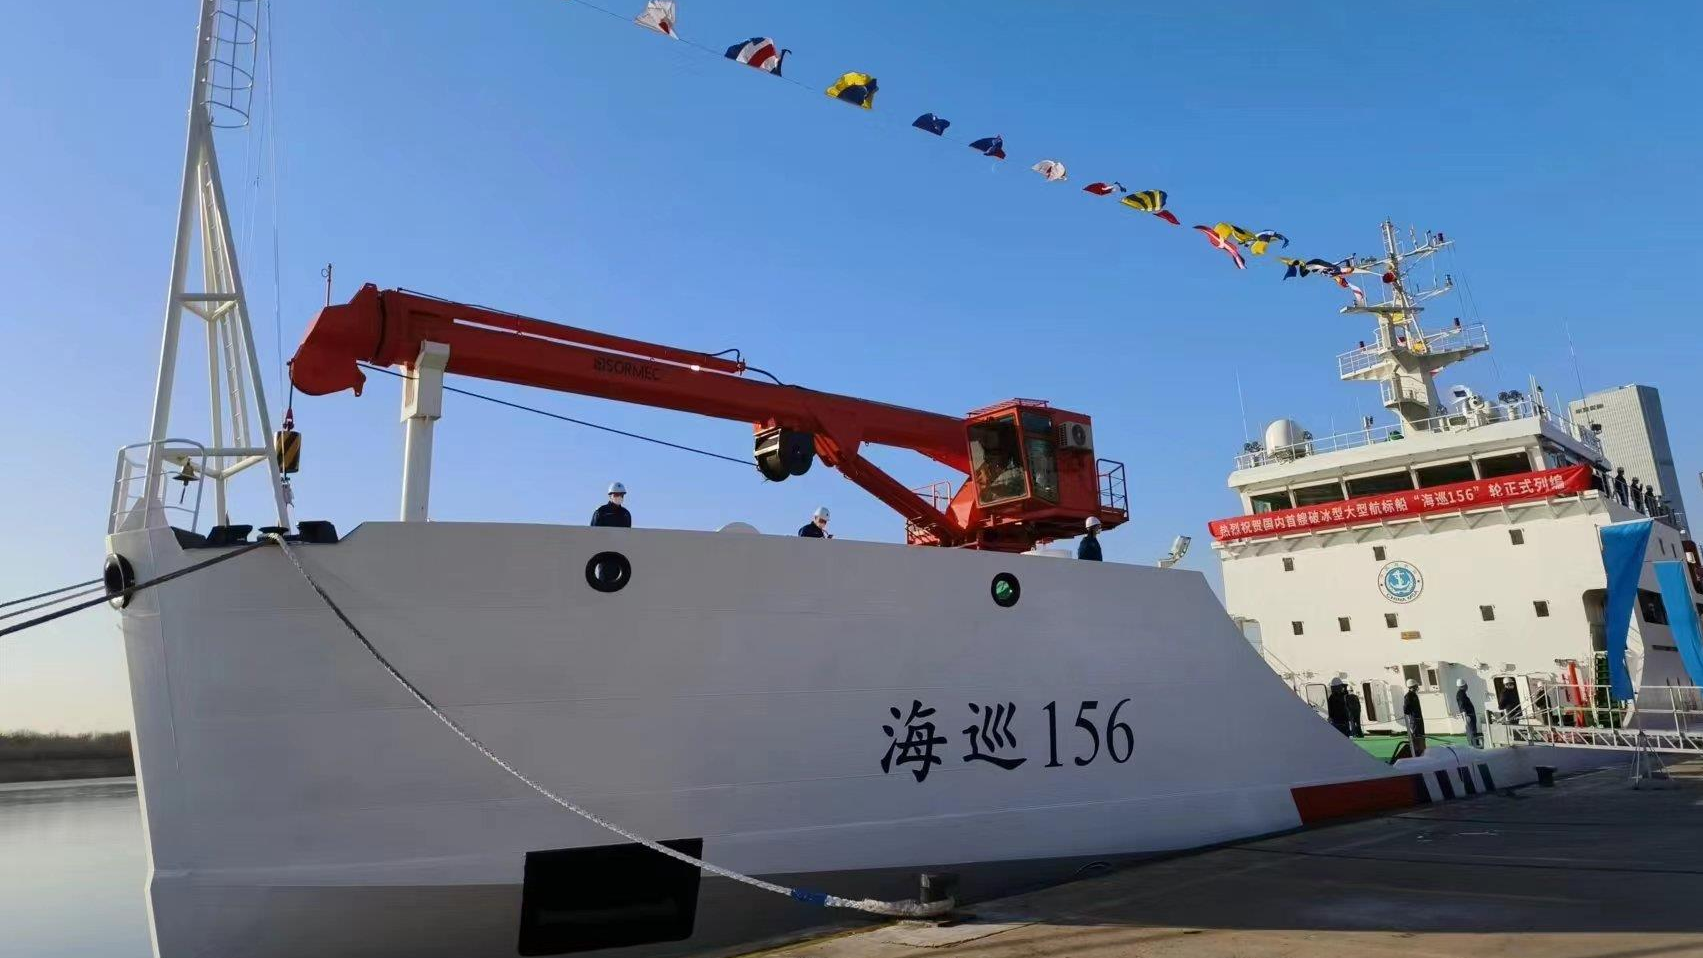 China's first buoy tender Haixun 156. /CMG